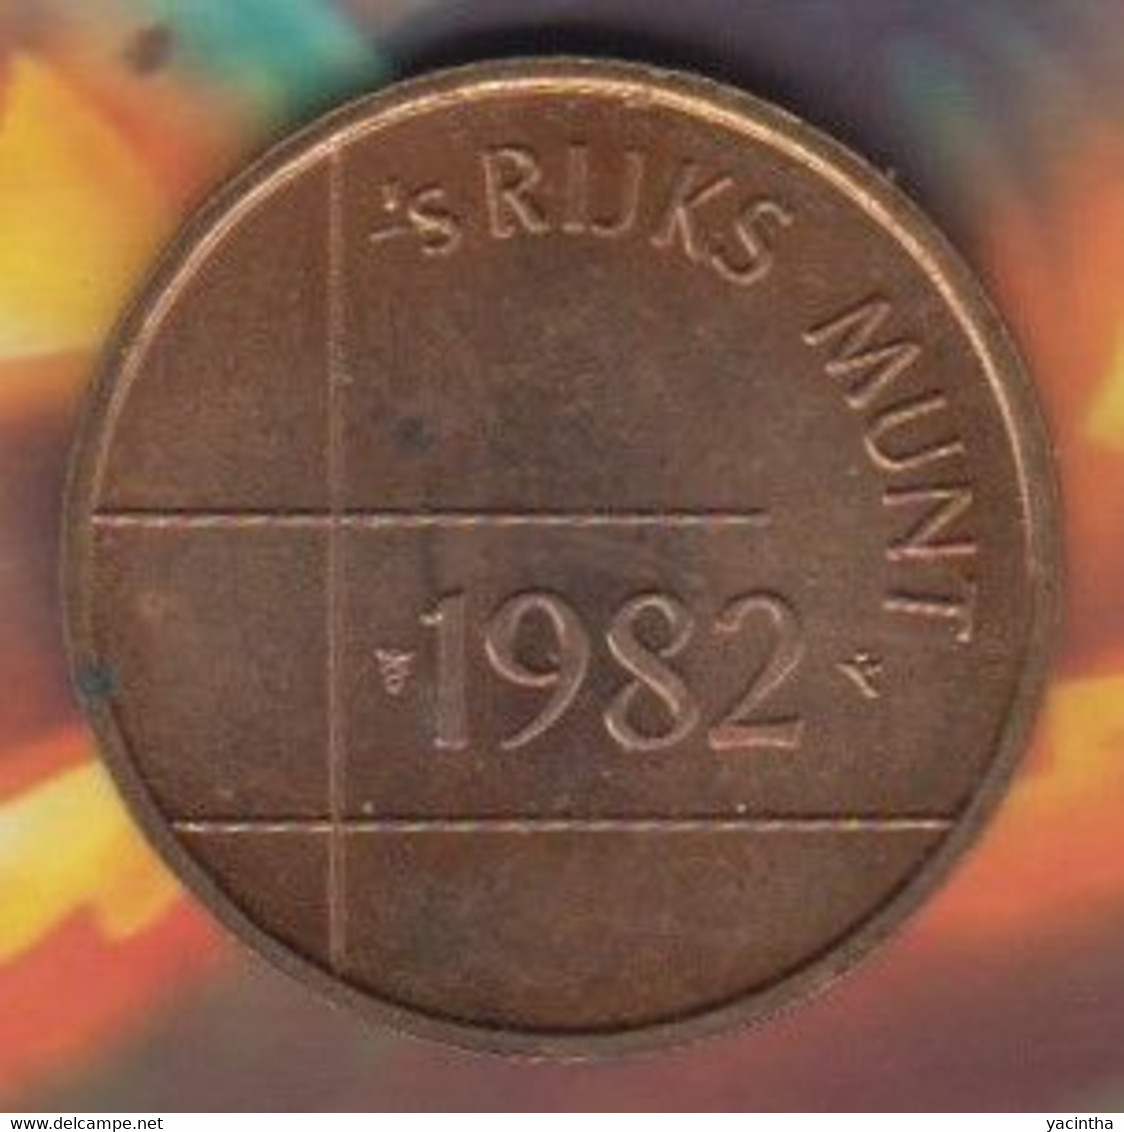 Rijksmunt  1982        (1023) - Souvenir-Medaille (elongated Coins)